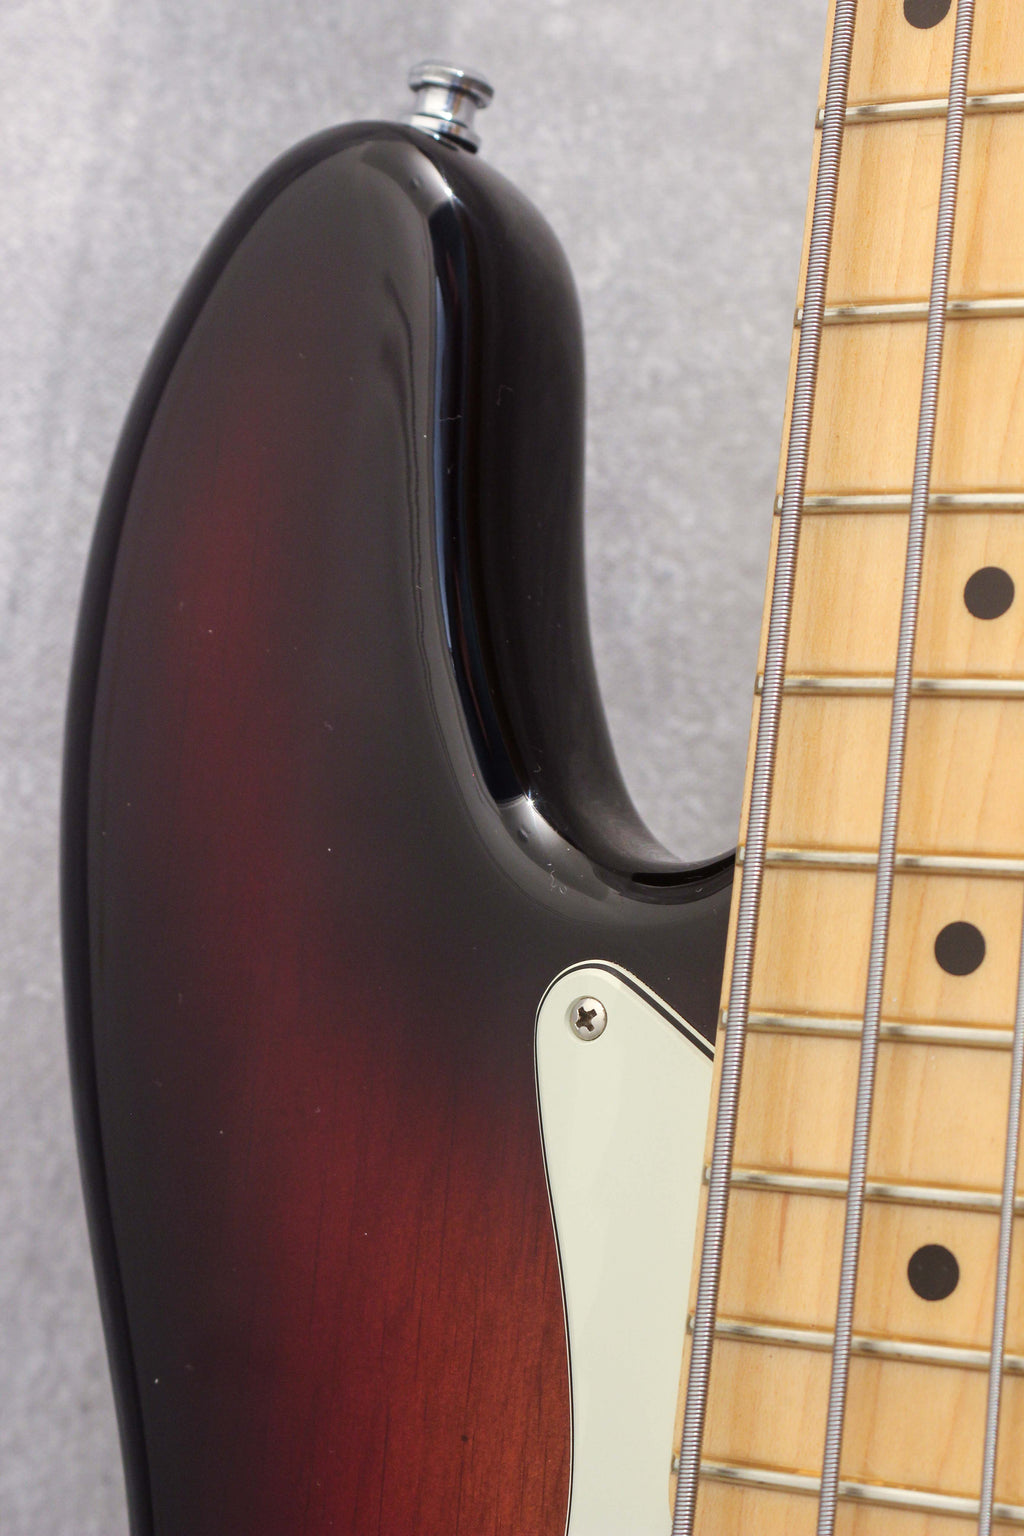 Fender American Professional Jazz Bass Sunburst 2016